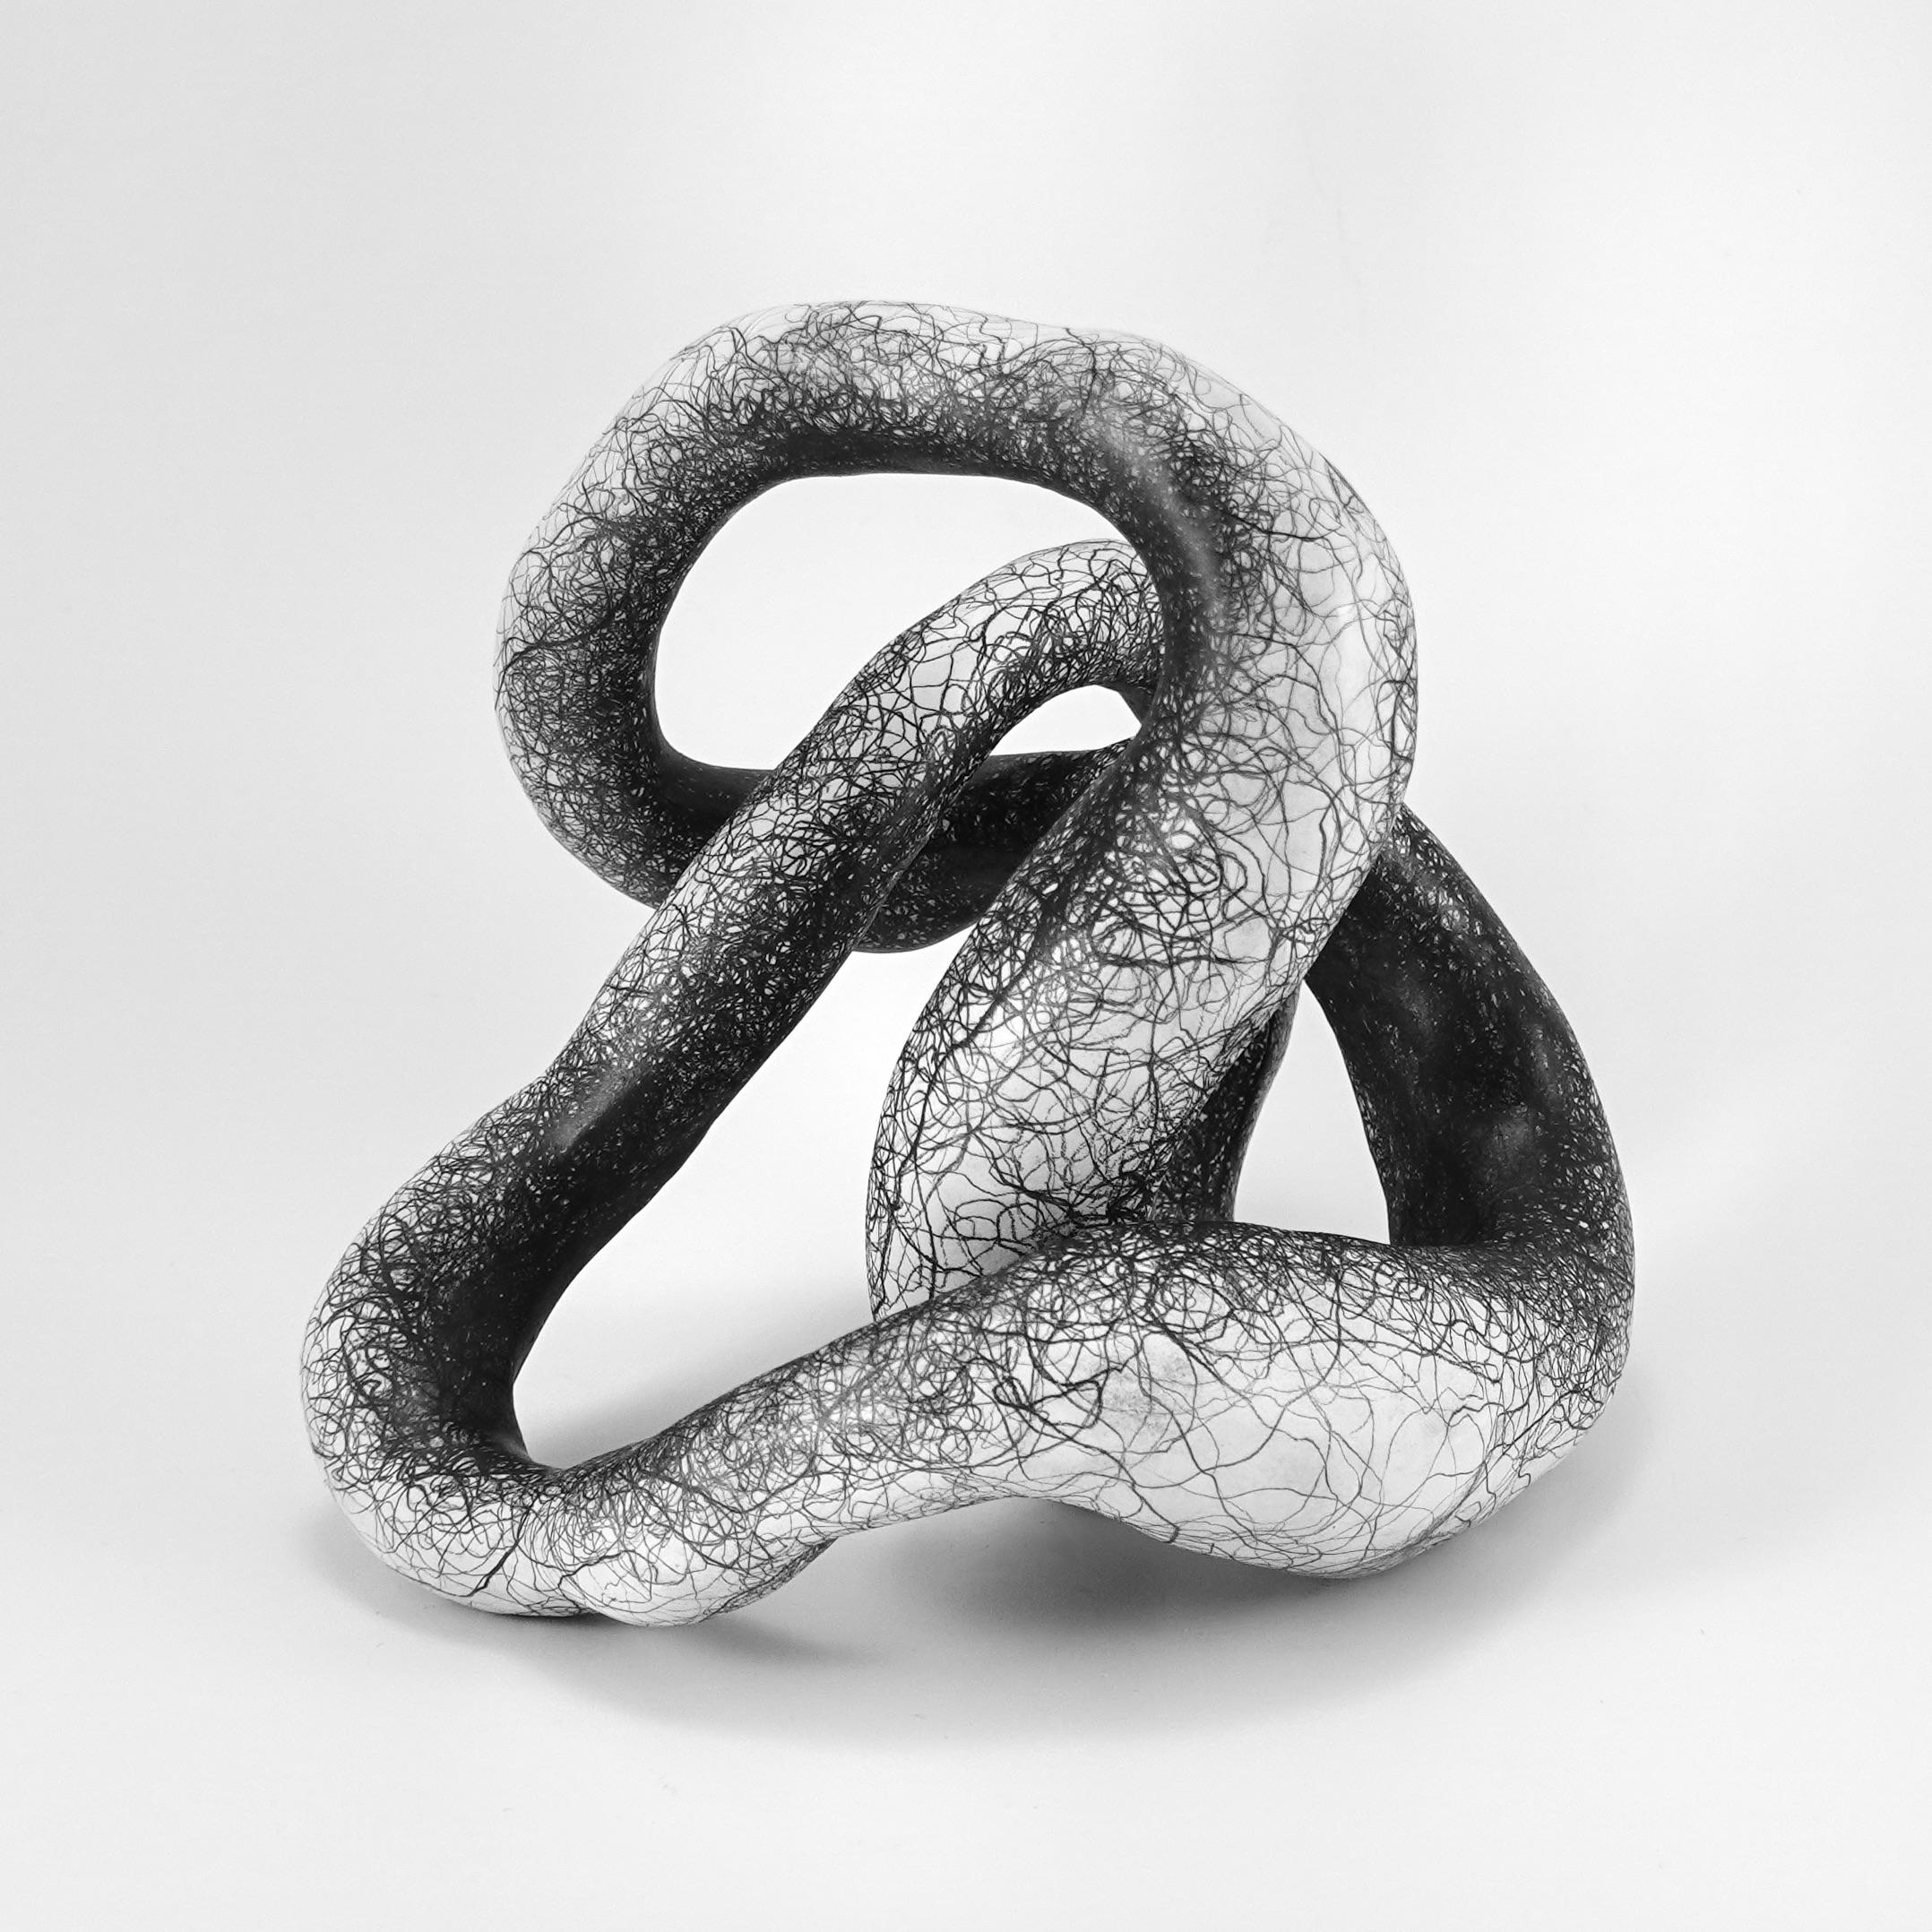 Abstract Sculpture Judi Tavill - Sculpture abstraite minimale en noir et blanc : "CENTRIC 2".